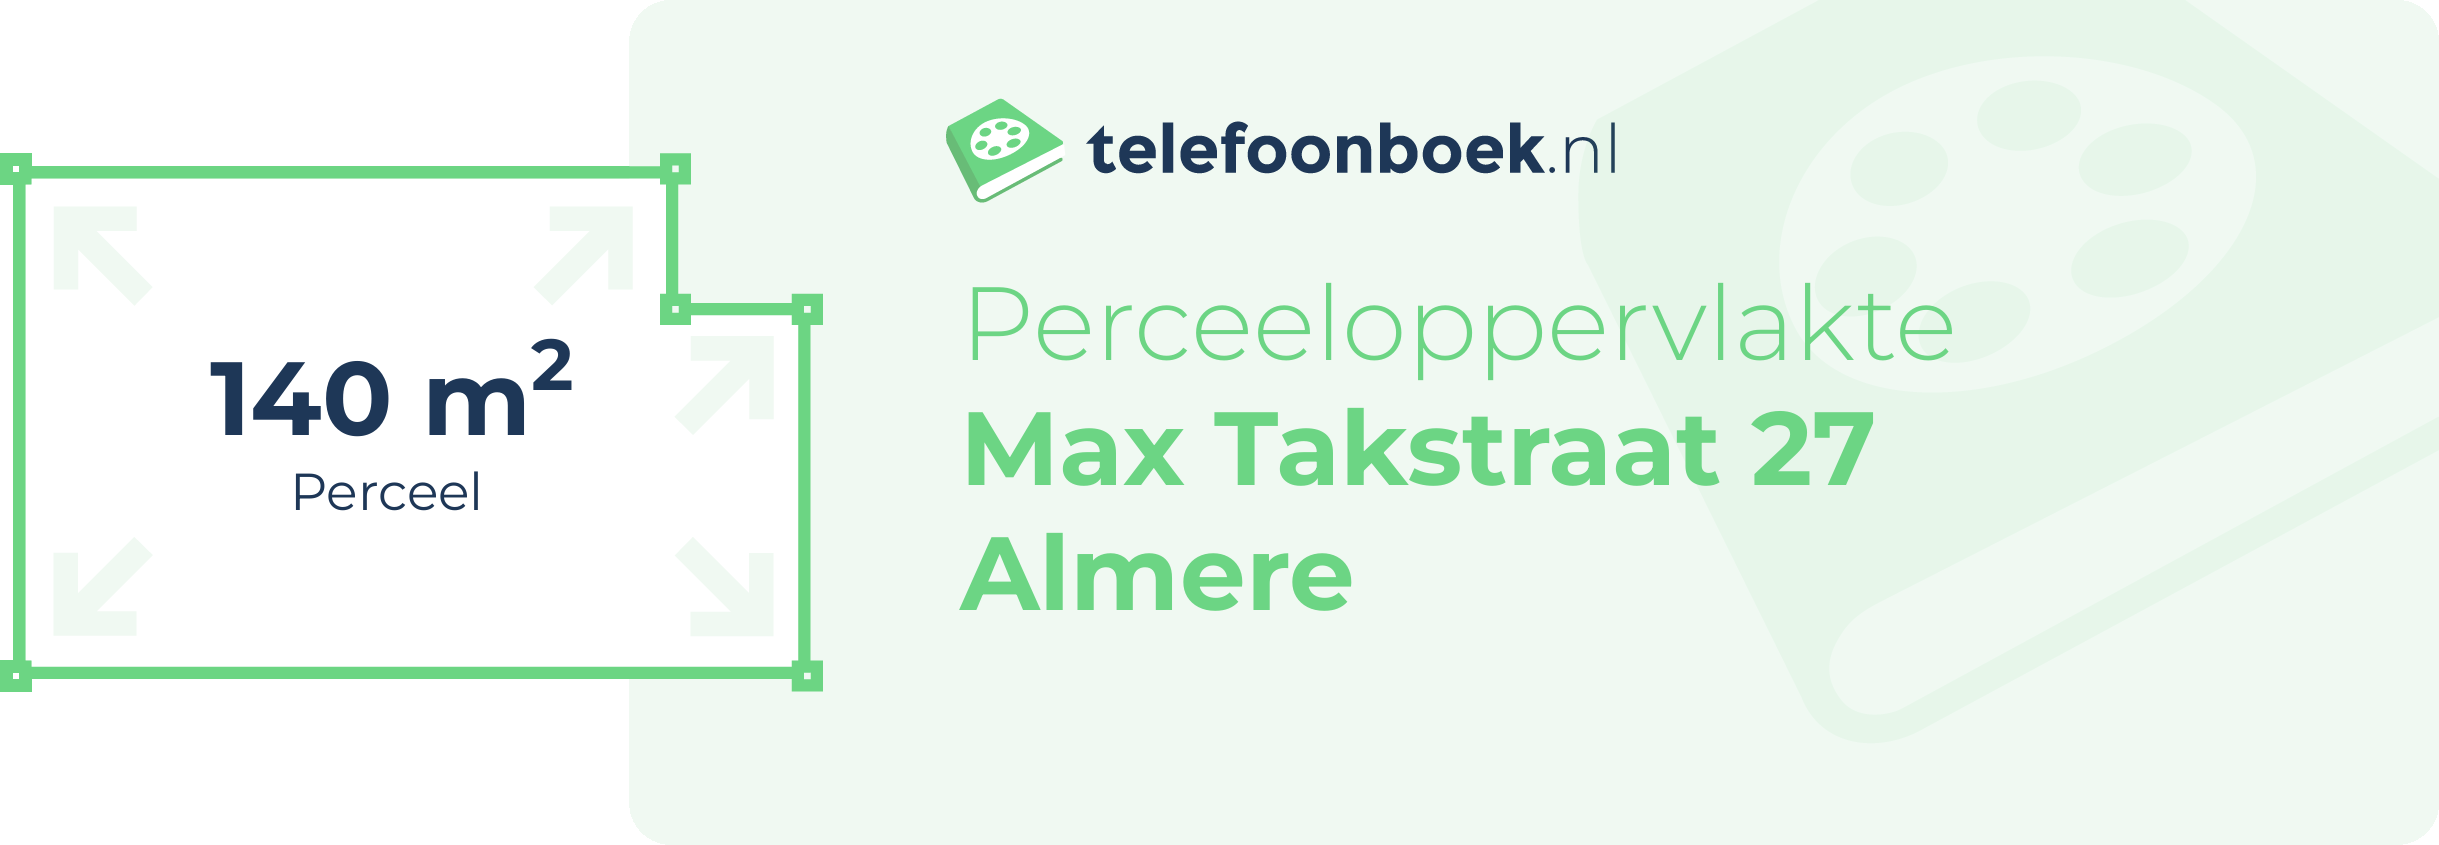 Perceeloppervlakte Max Takstraat 27 Almere